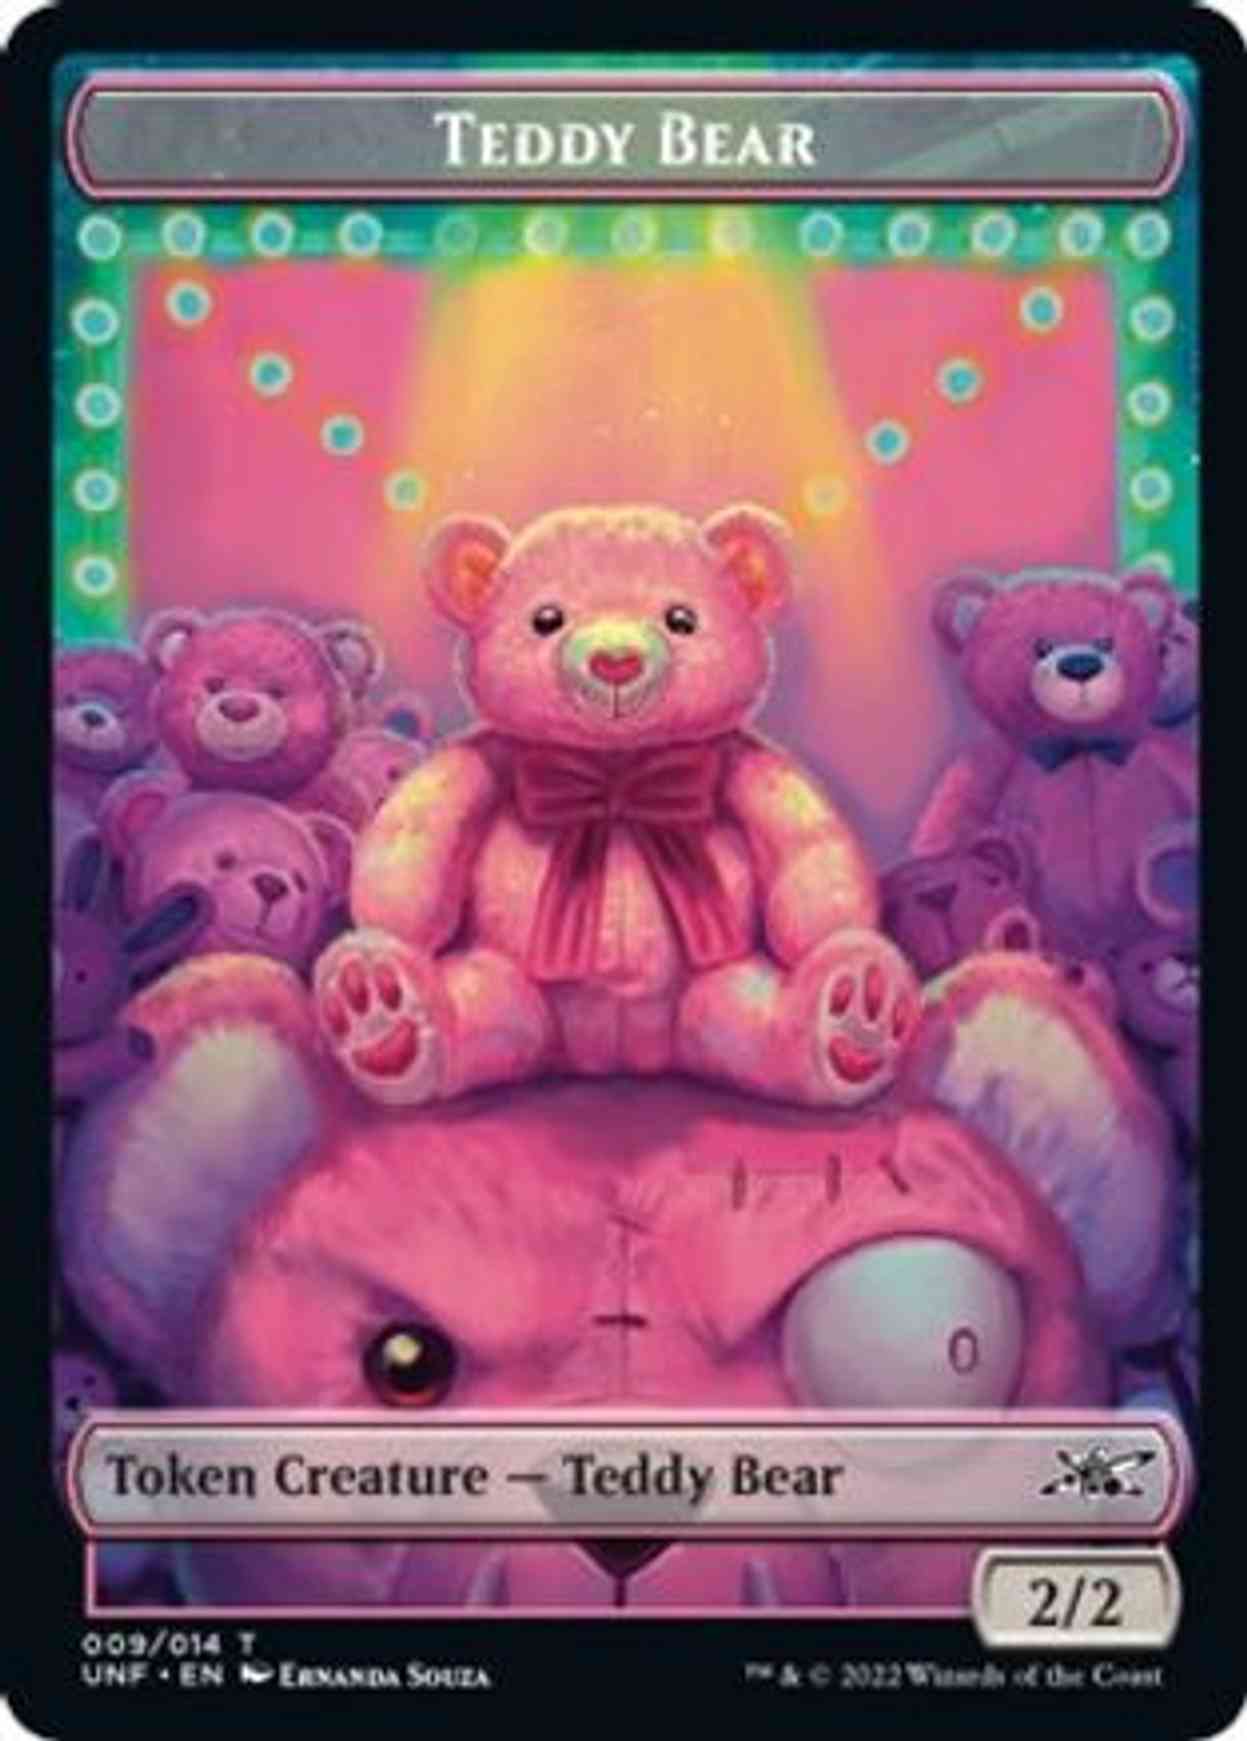 Teddy Bear // Treasure (013) Double-sided Token magic card front